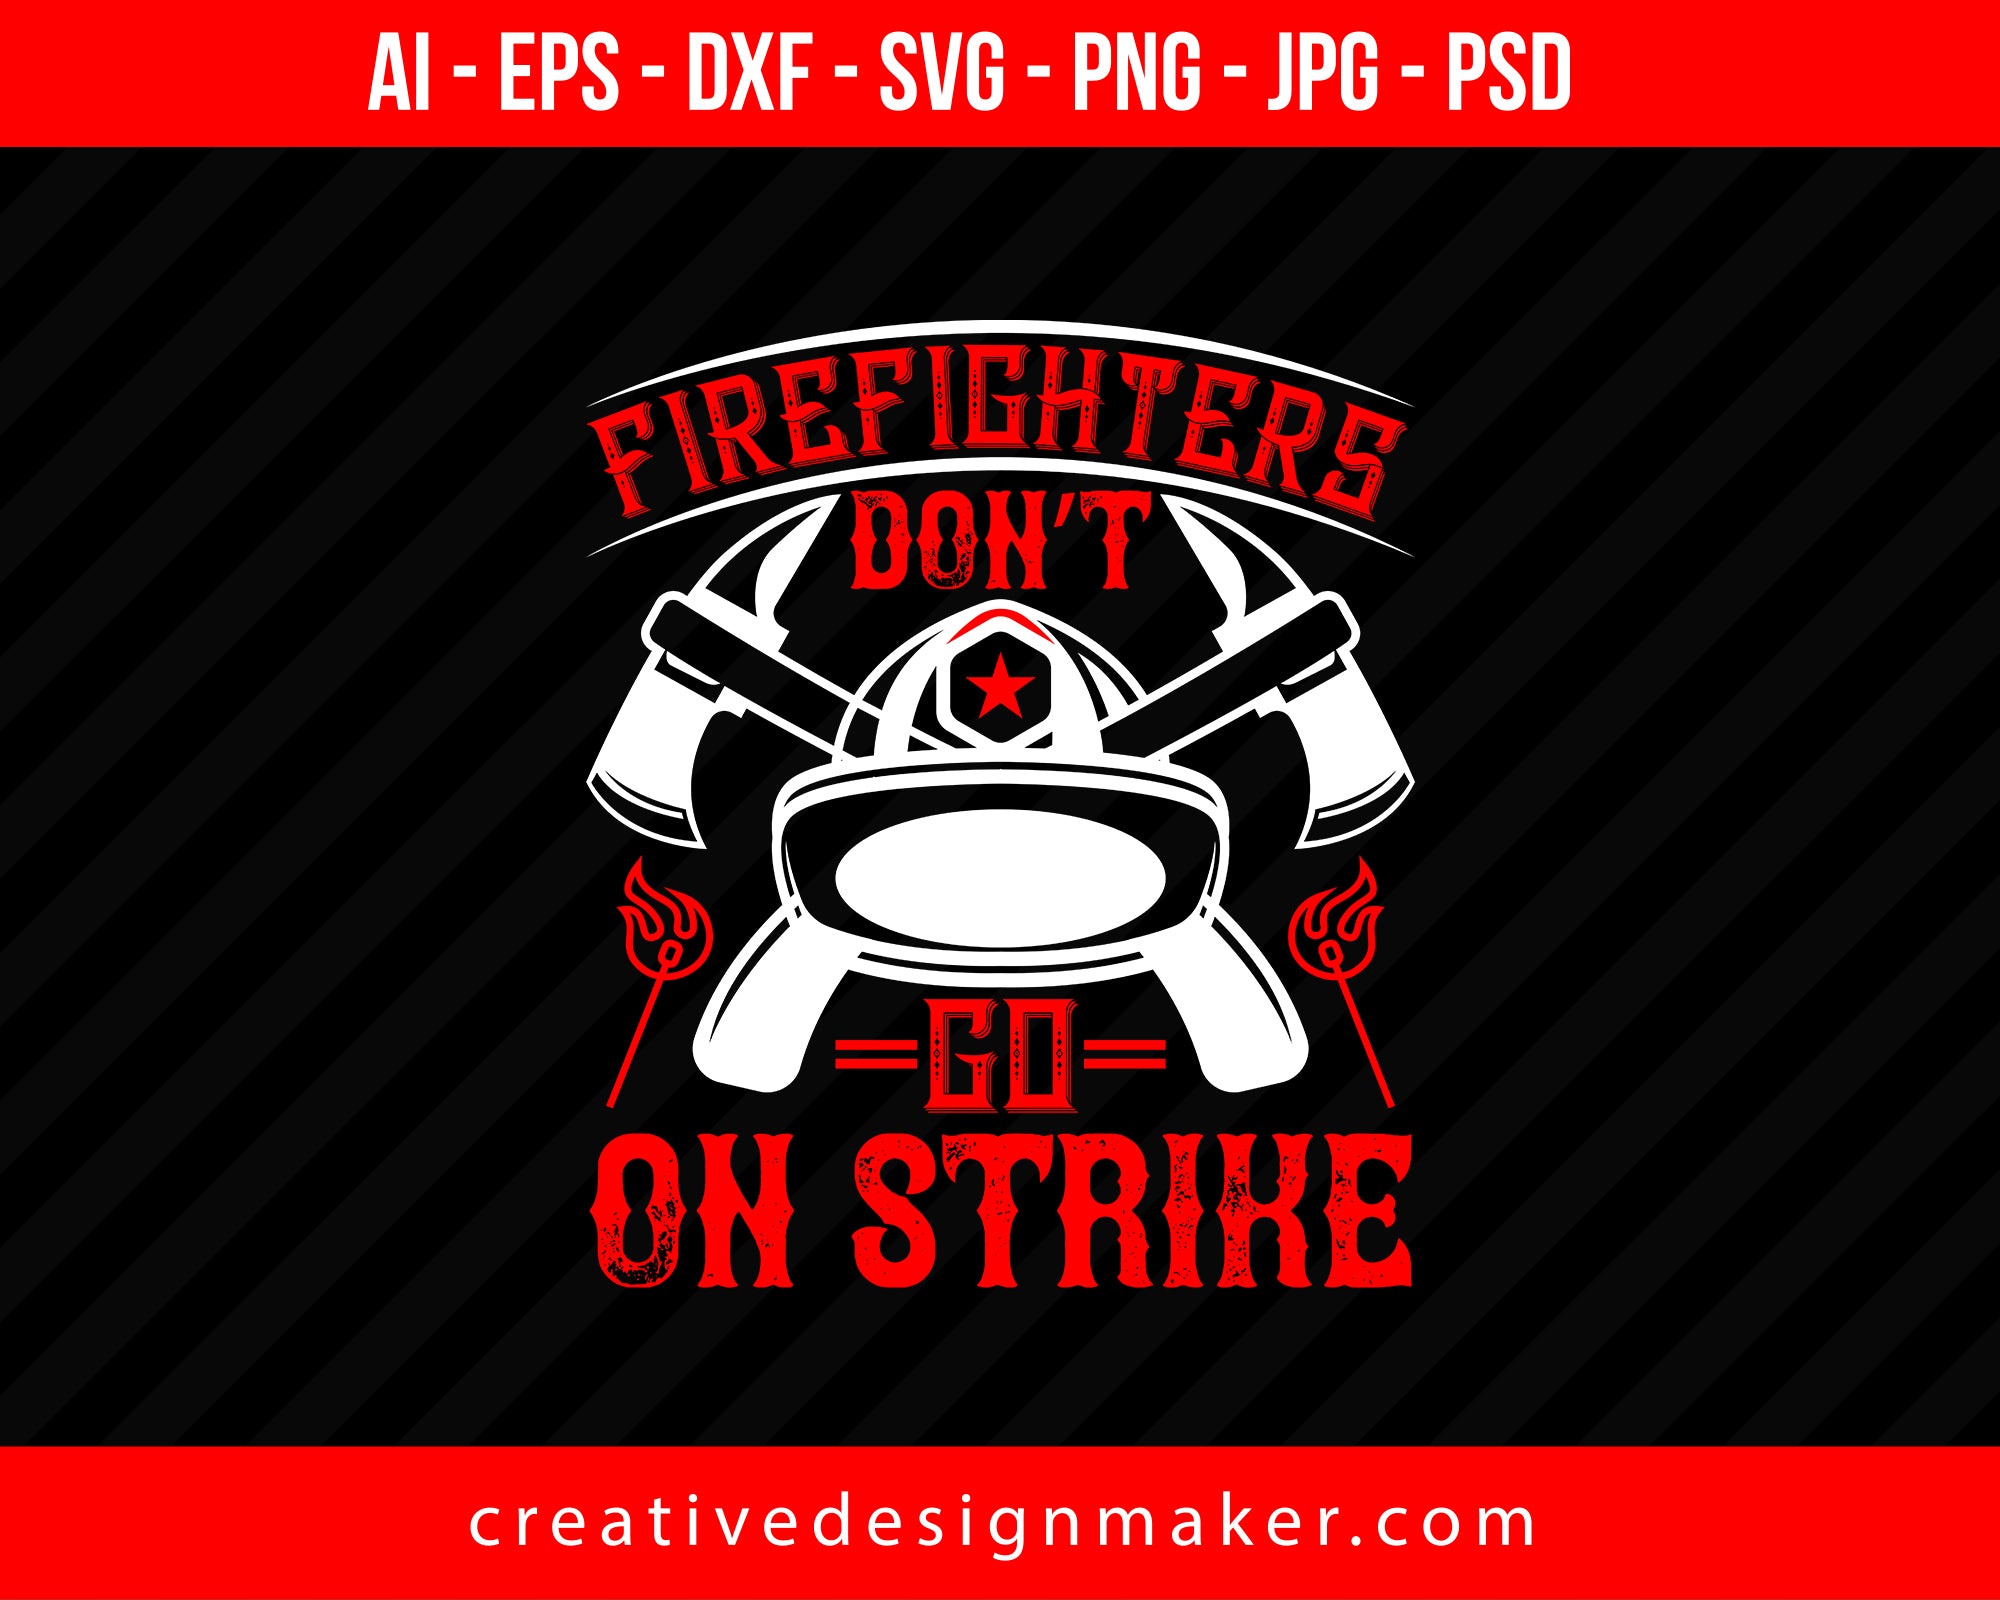 Firefighters Don’t Go On Strike Print Ready Editable T-Shirt SVG Design!